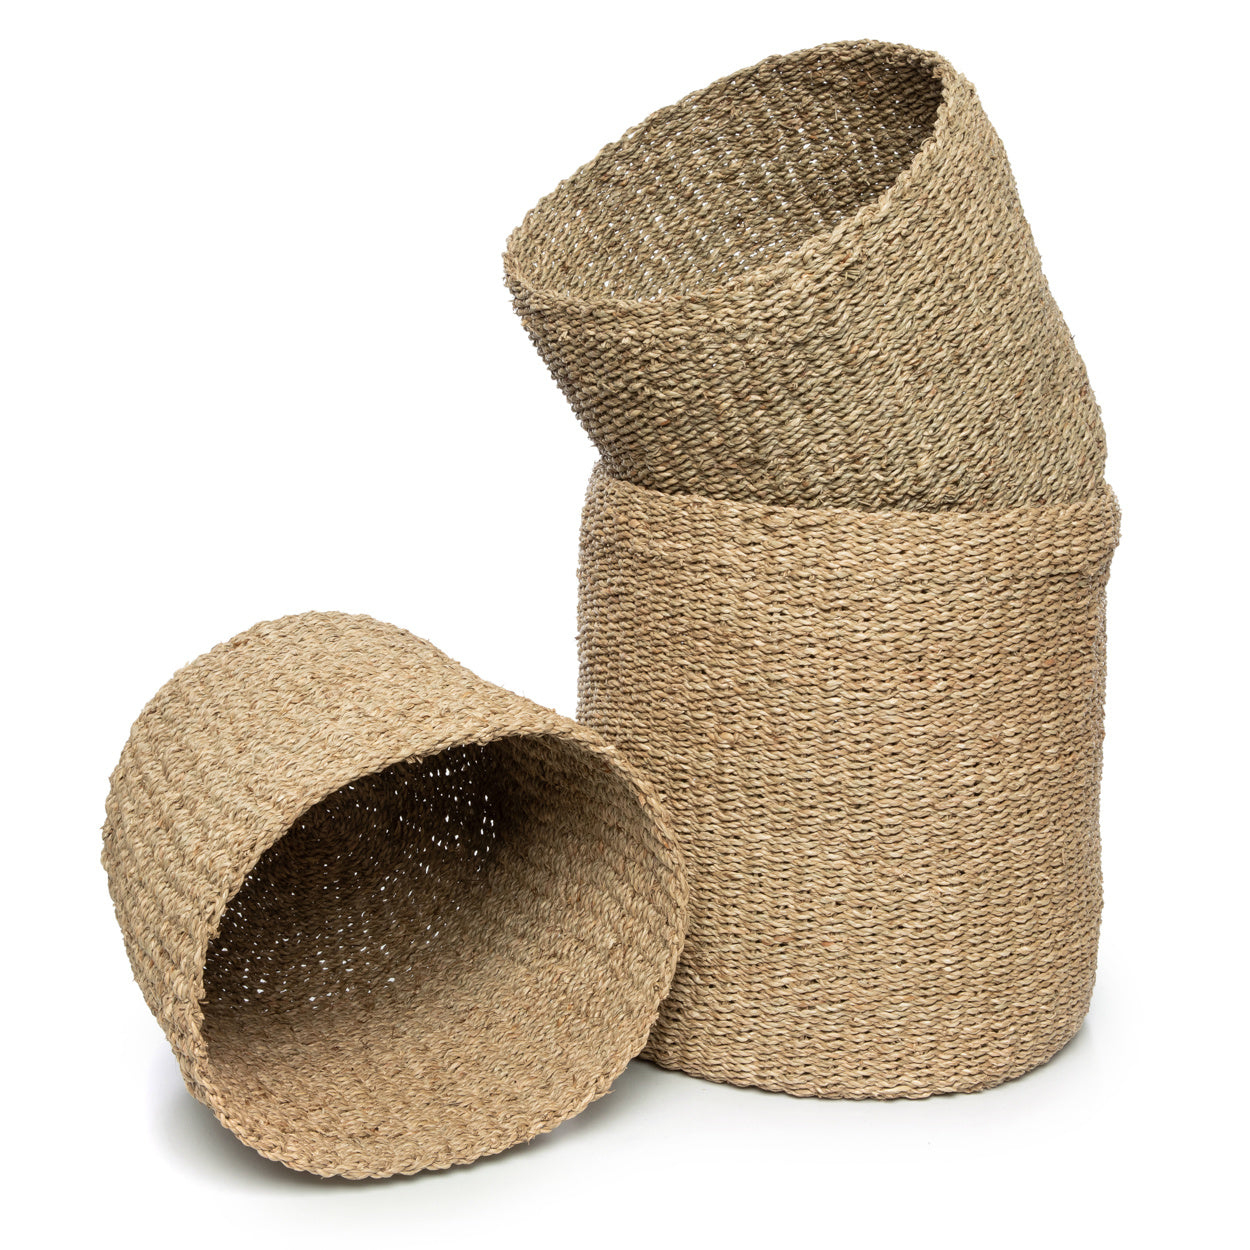 THE HO CHI MINH Baskets Set of 3 folded